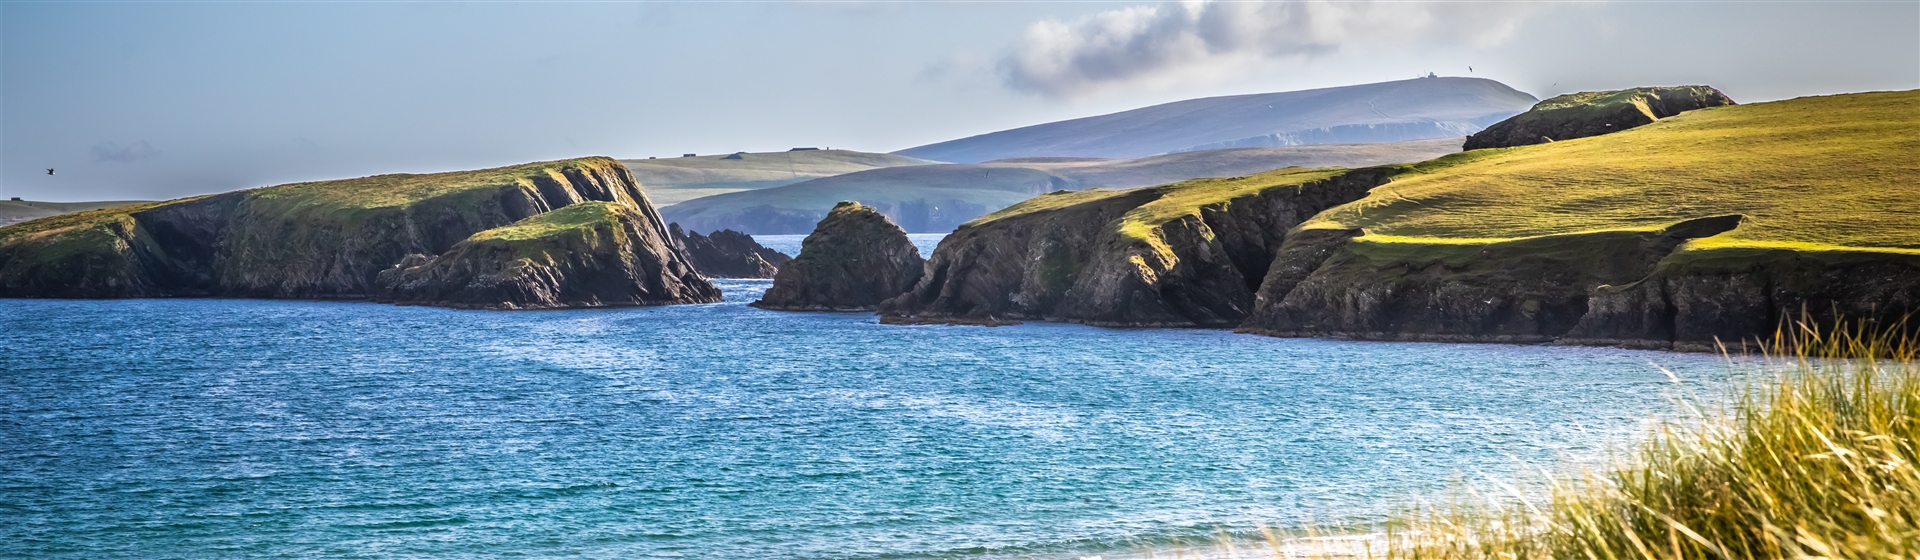 <img src="shetlandislands©shutterstock.jpeg" alt="Shetland Island"/>